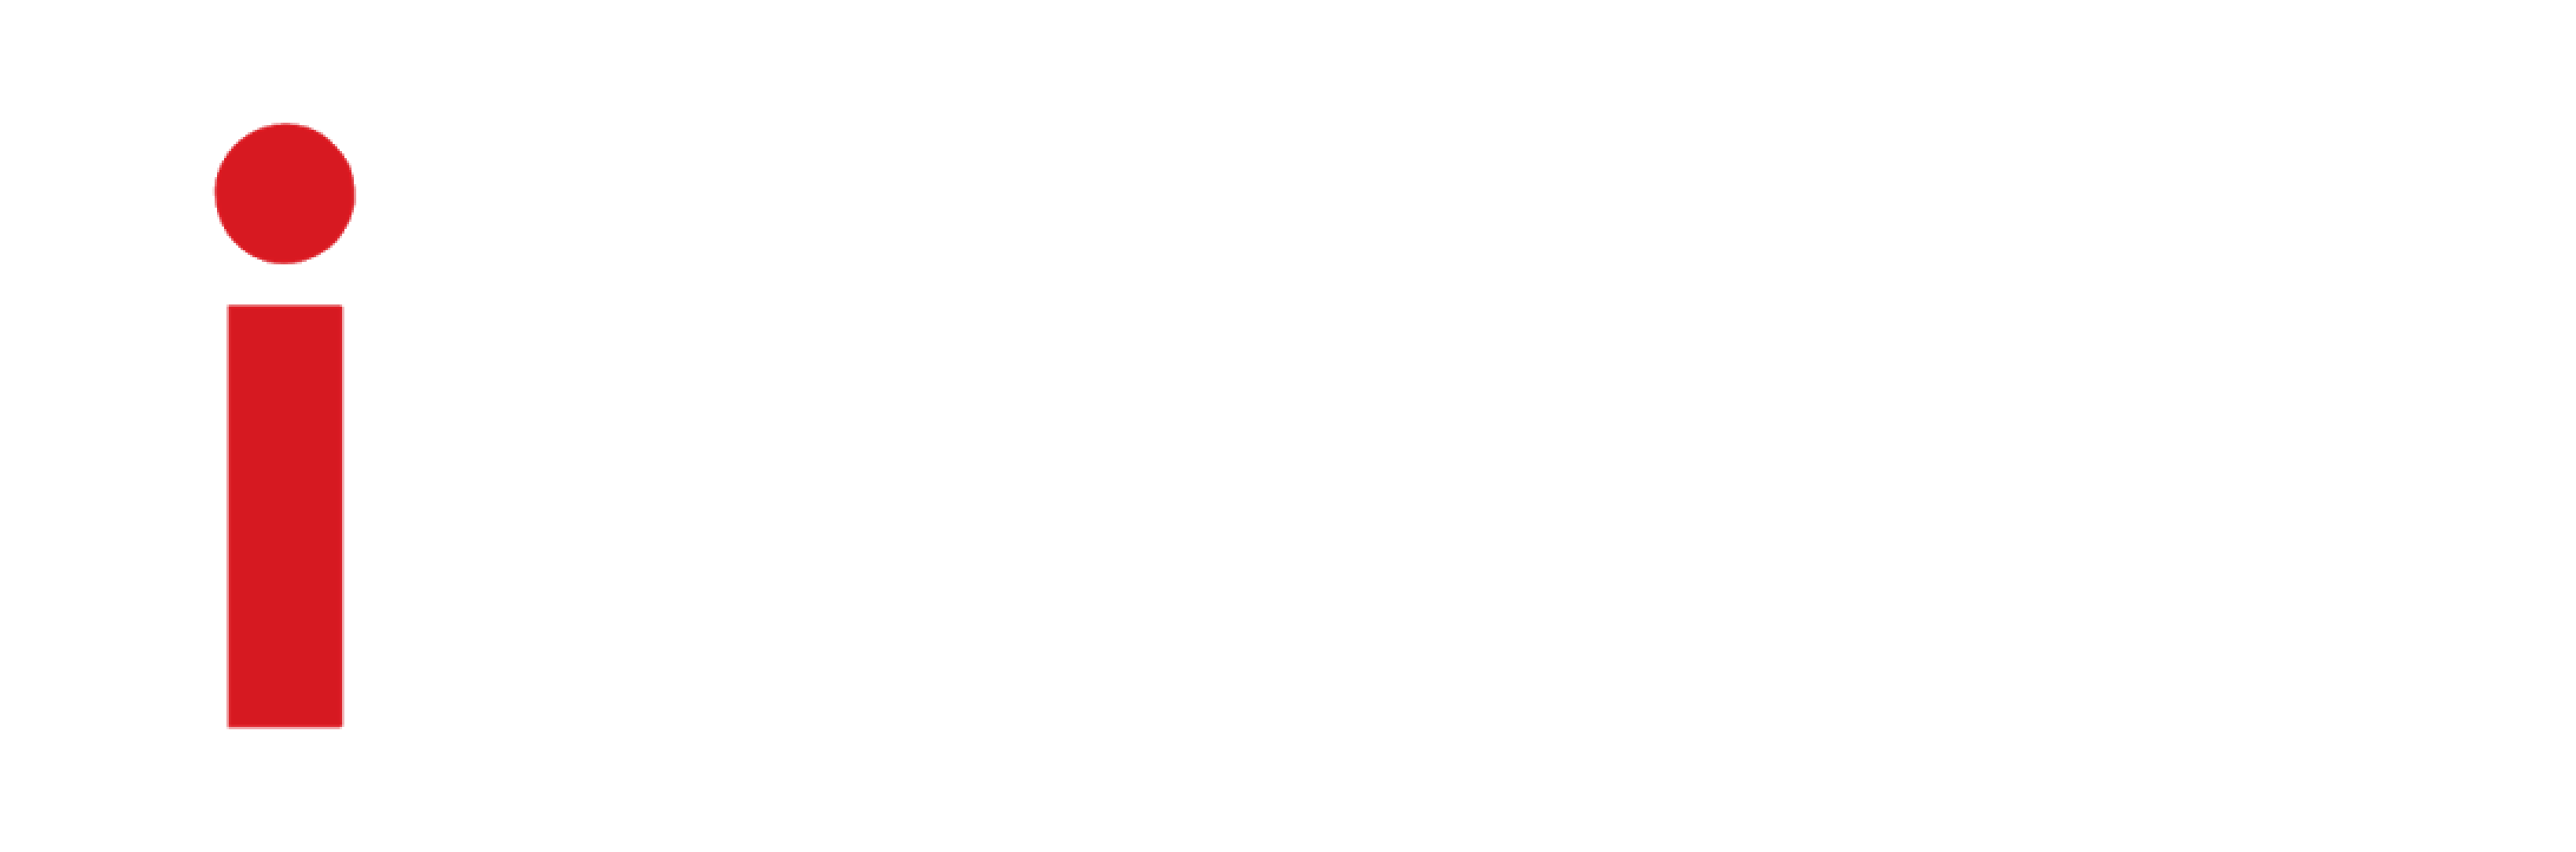 Inews tv